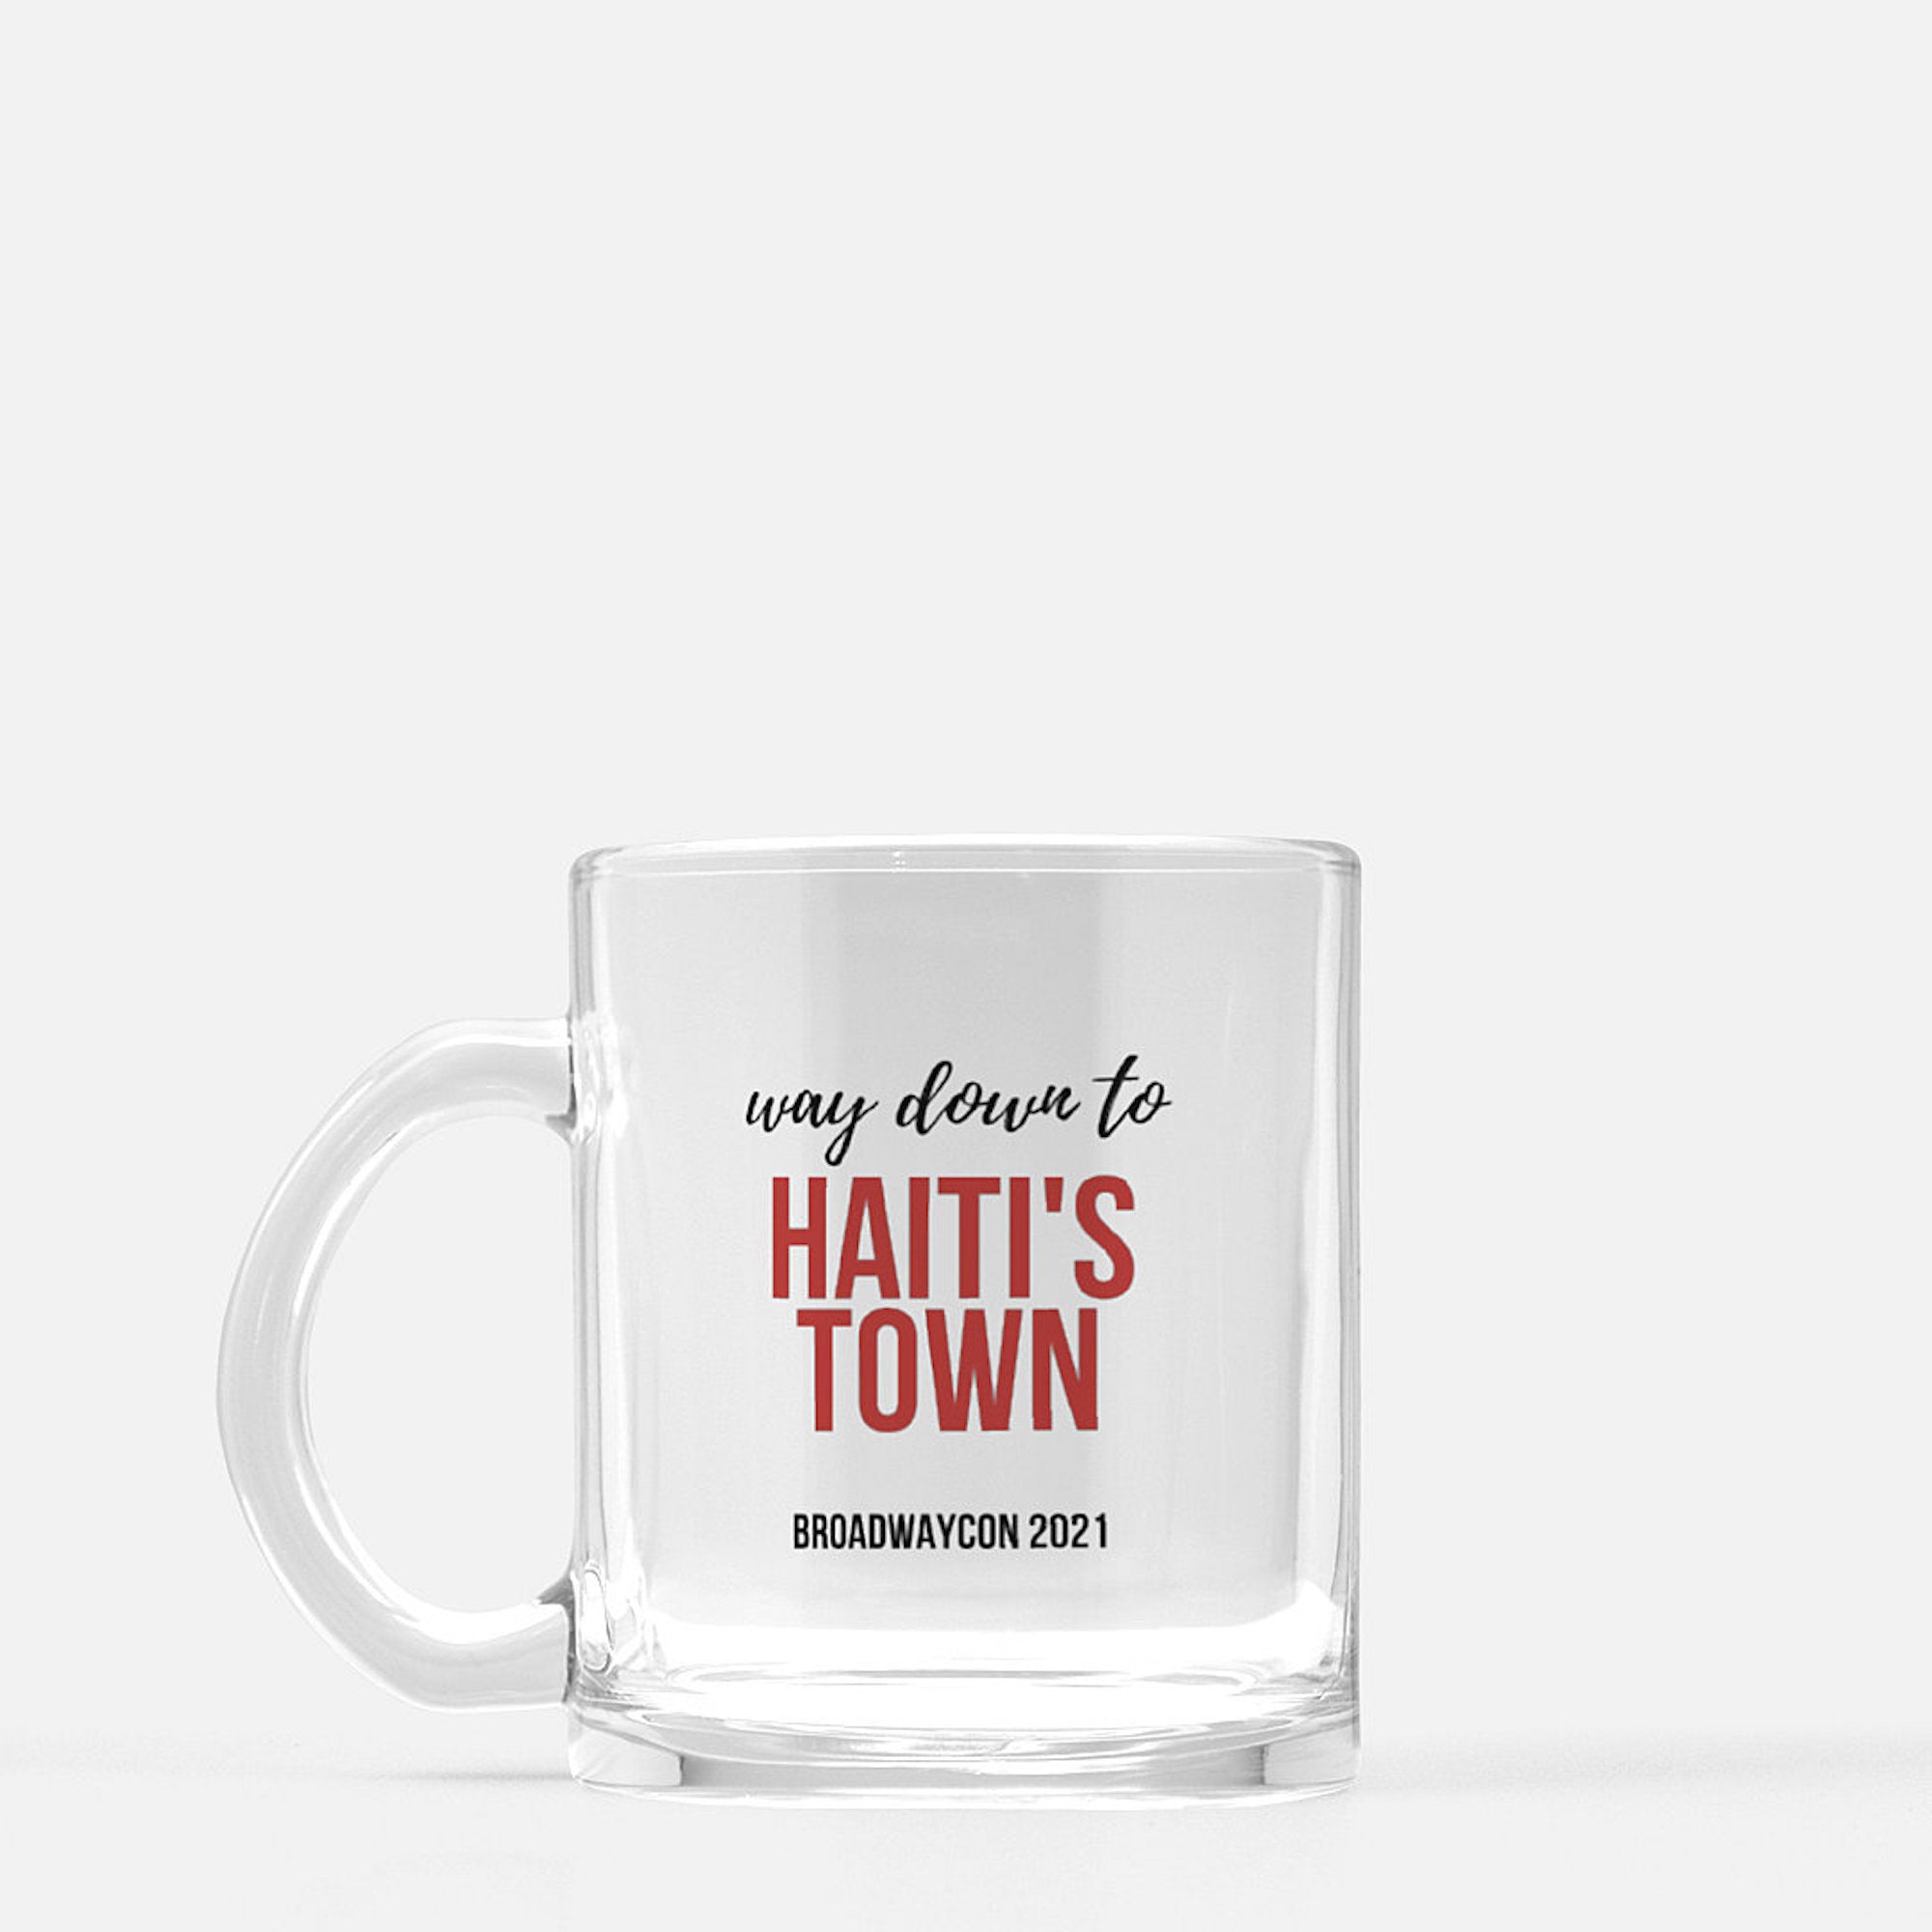 BroadwayCon Haiti&#39;s Town Mug - Broadway Con 2021 Limited Edition